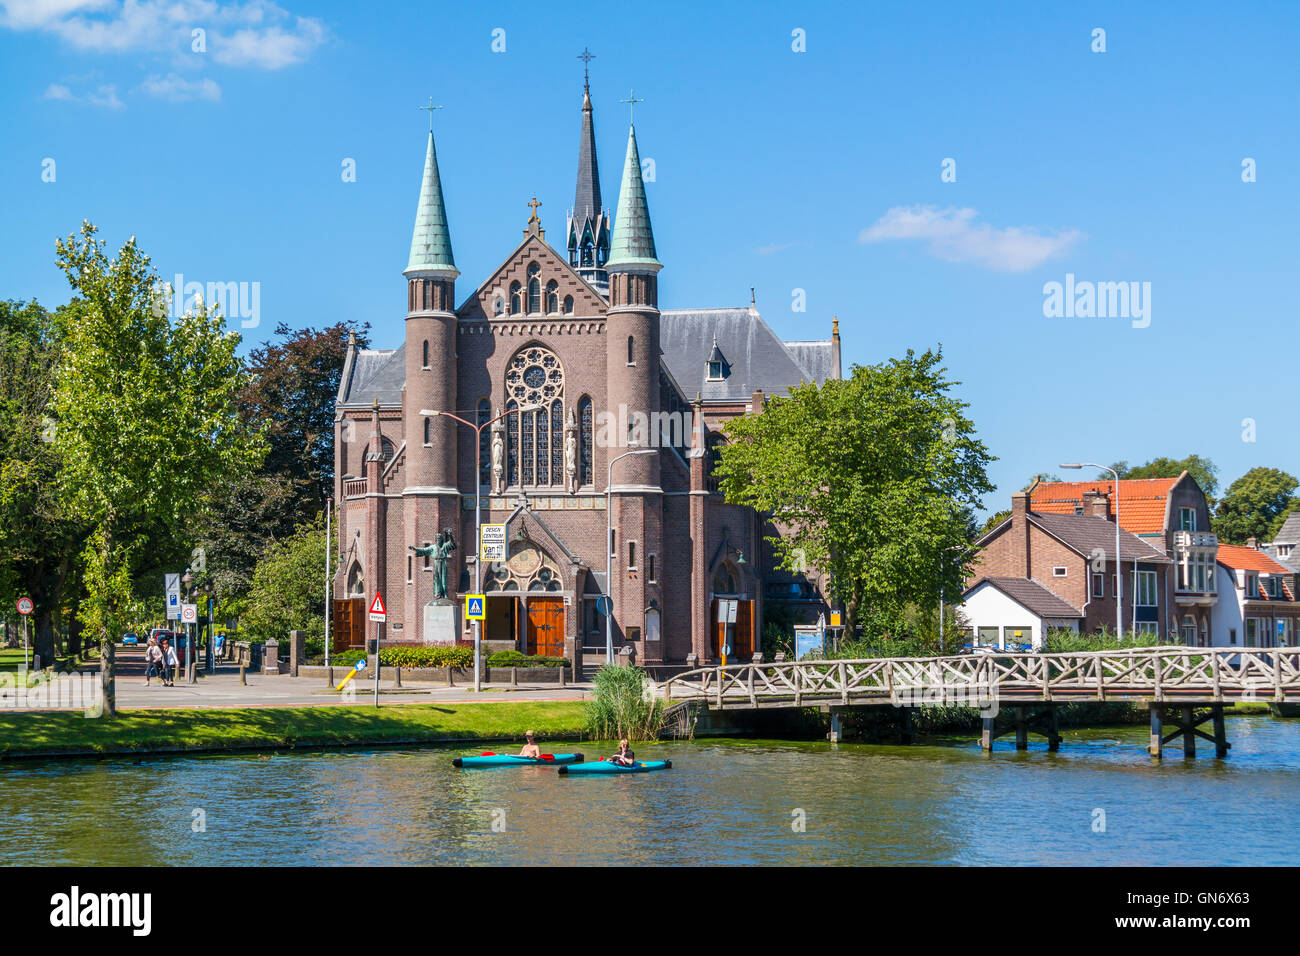 People in kayaks on Singelgracht canal and St. Joseph's Church in Alkmaar, Netherlands Stock Photo